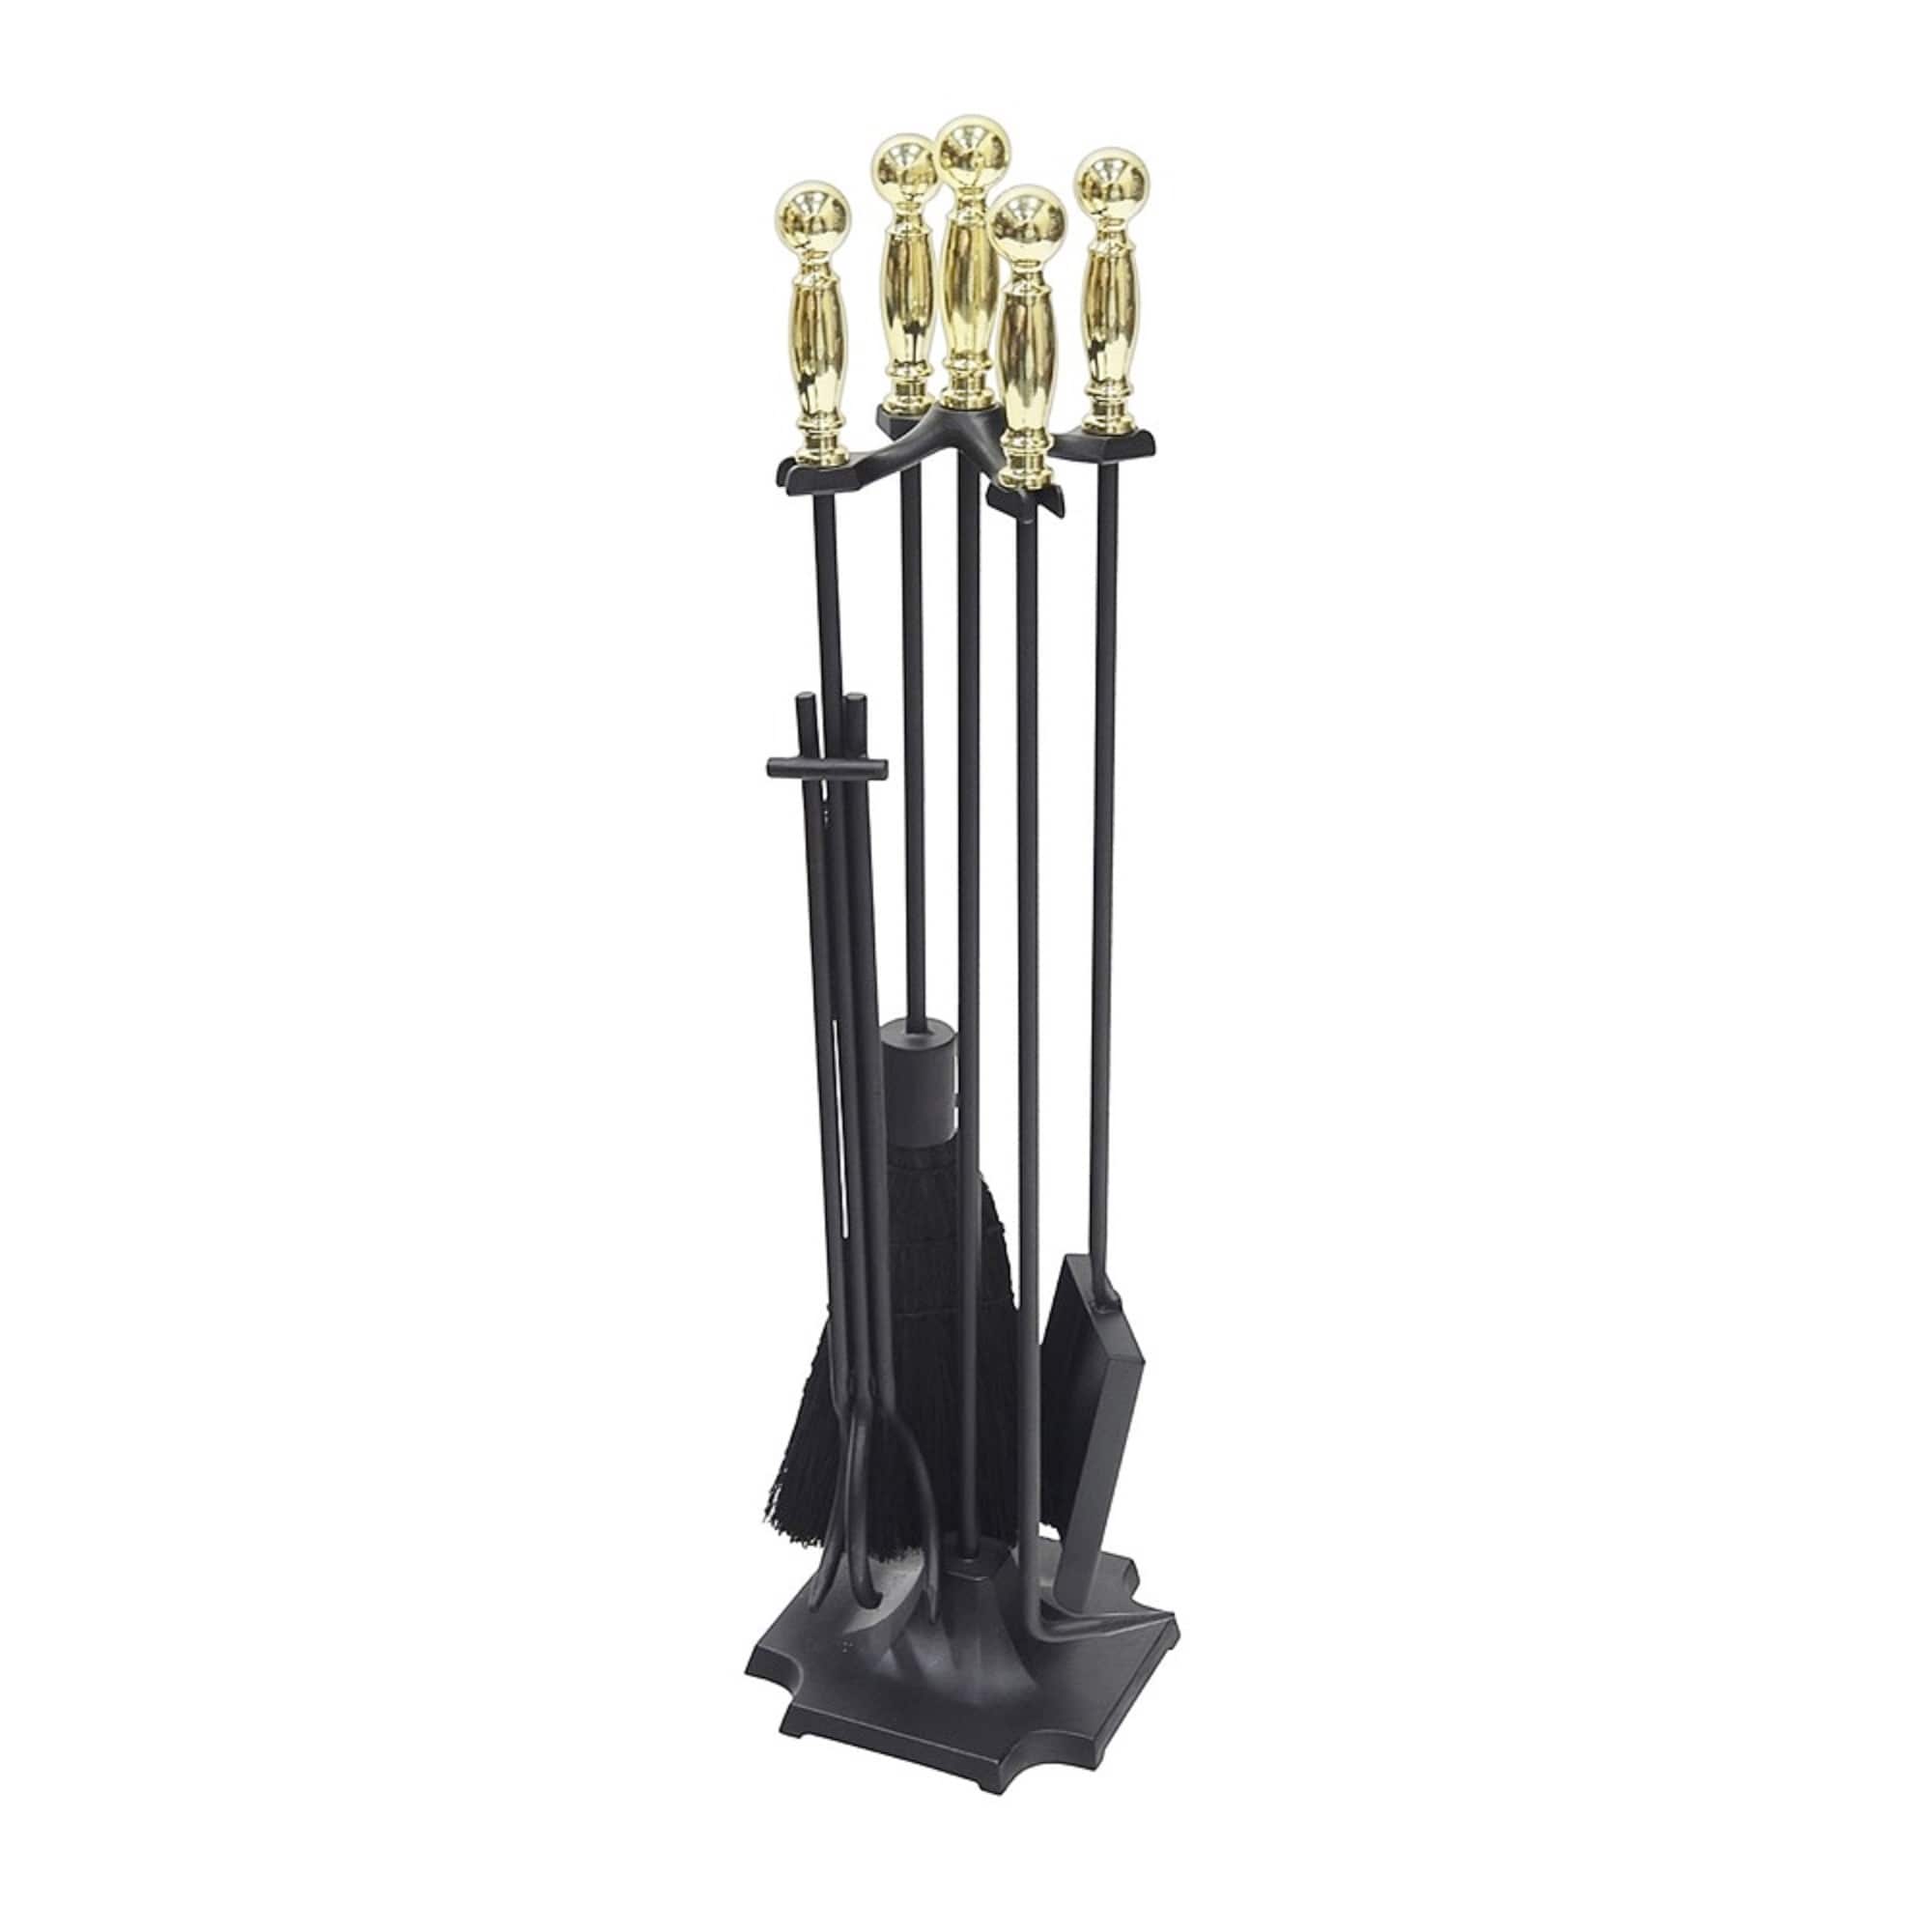 Minuteman International Carlisle Fireplace Set of 4 Tools, 30.5 Inch Tall, Polished Brass and Black